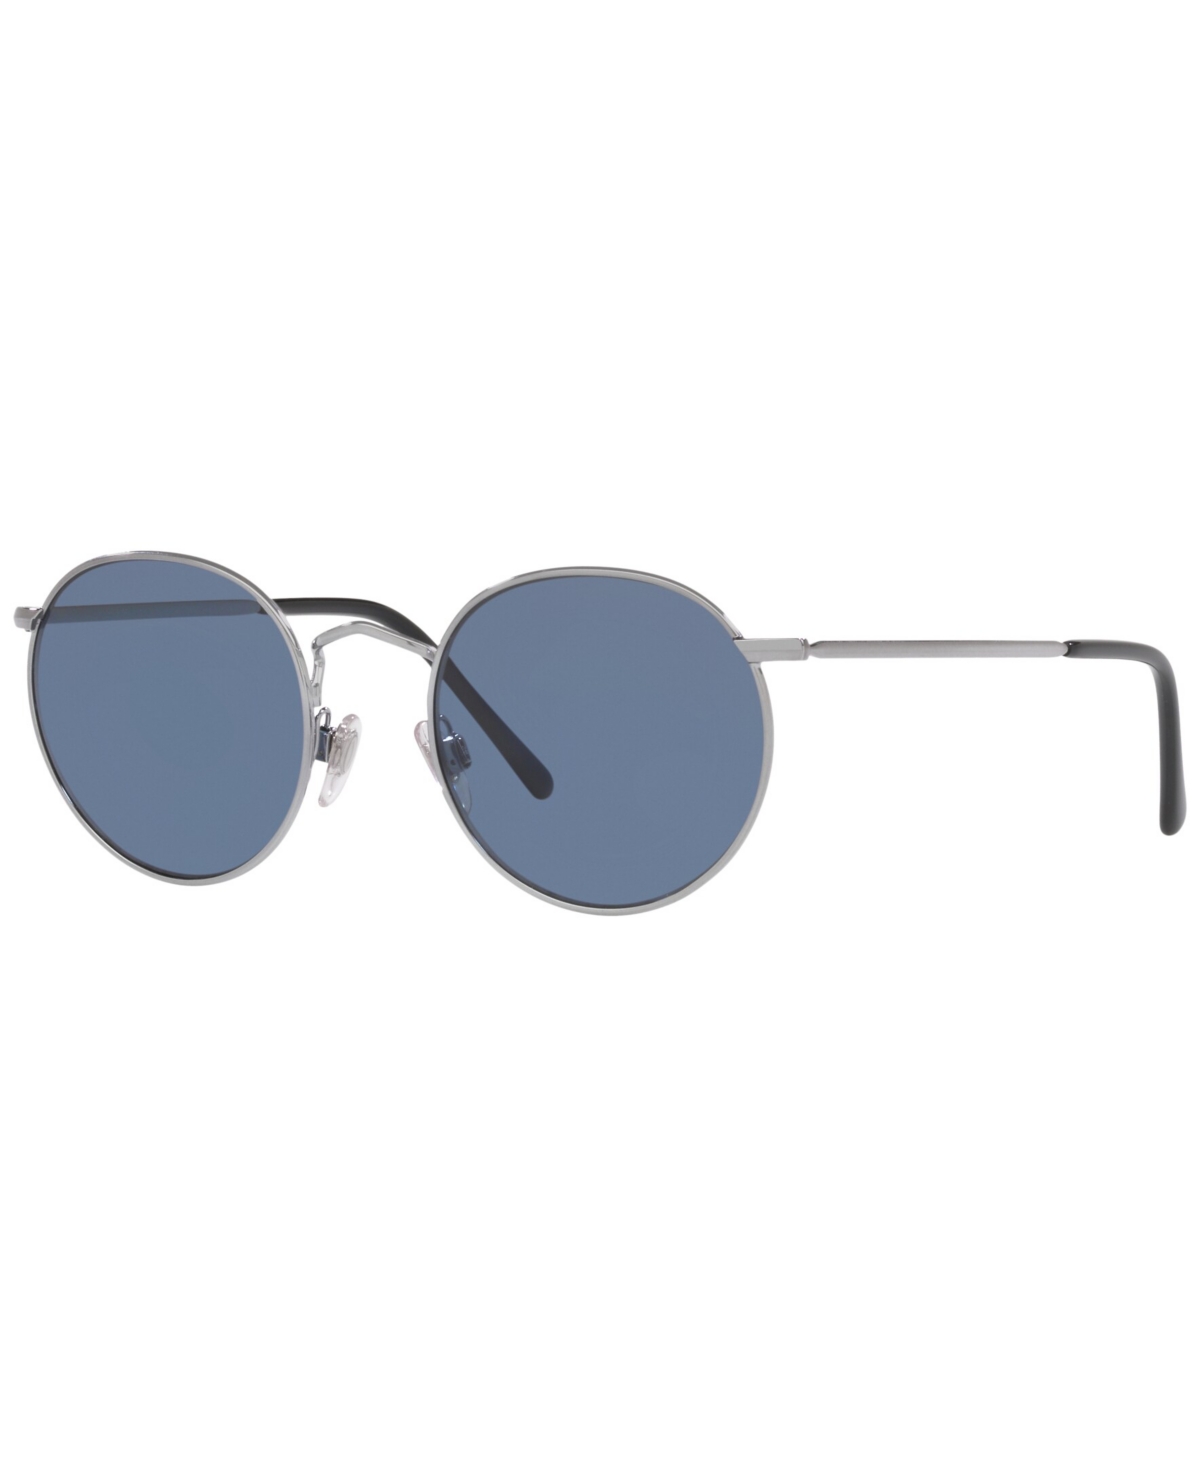 Unisex Polarized Sunglasses, HU100949-p - Shiny Light Gold-Tone